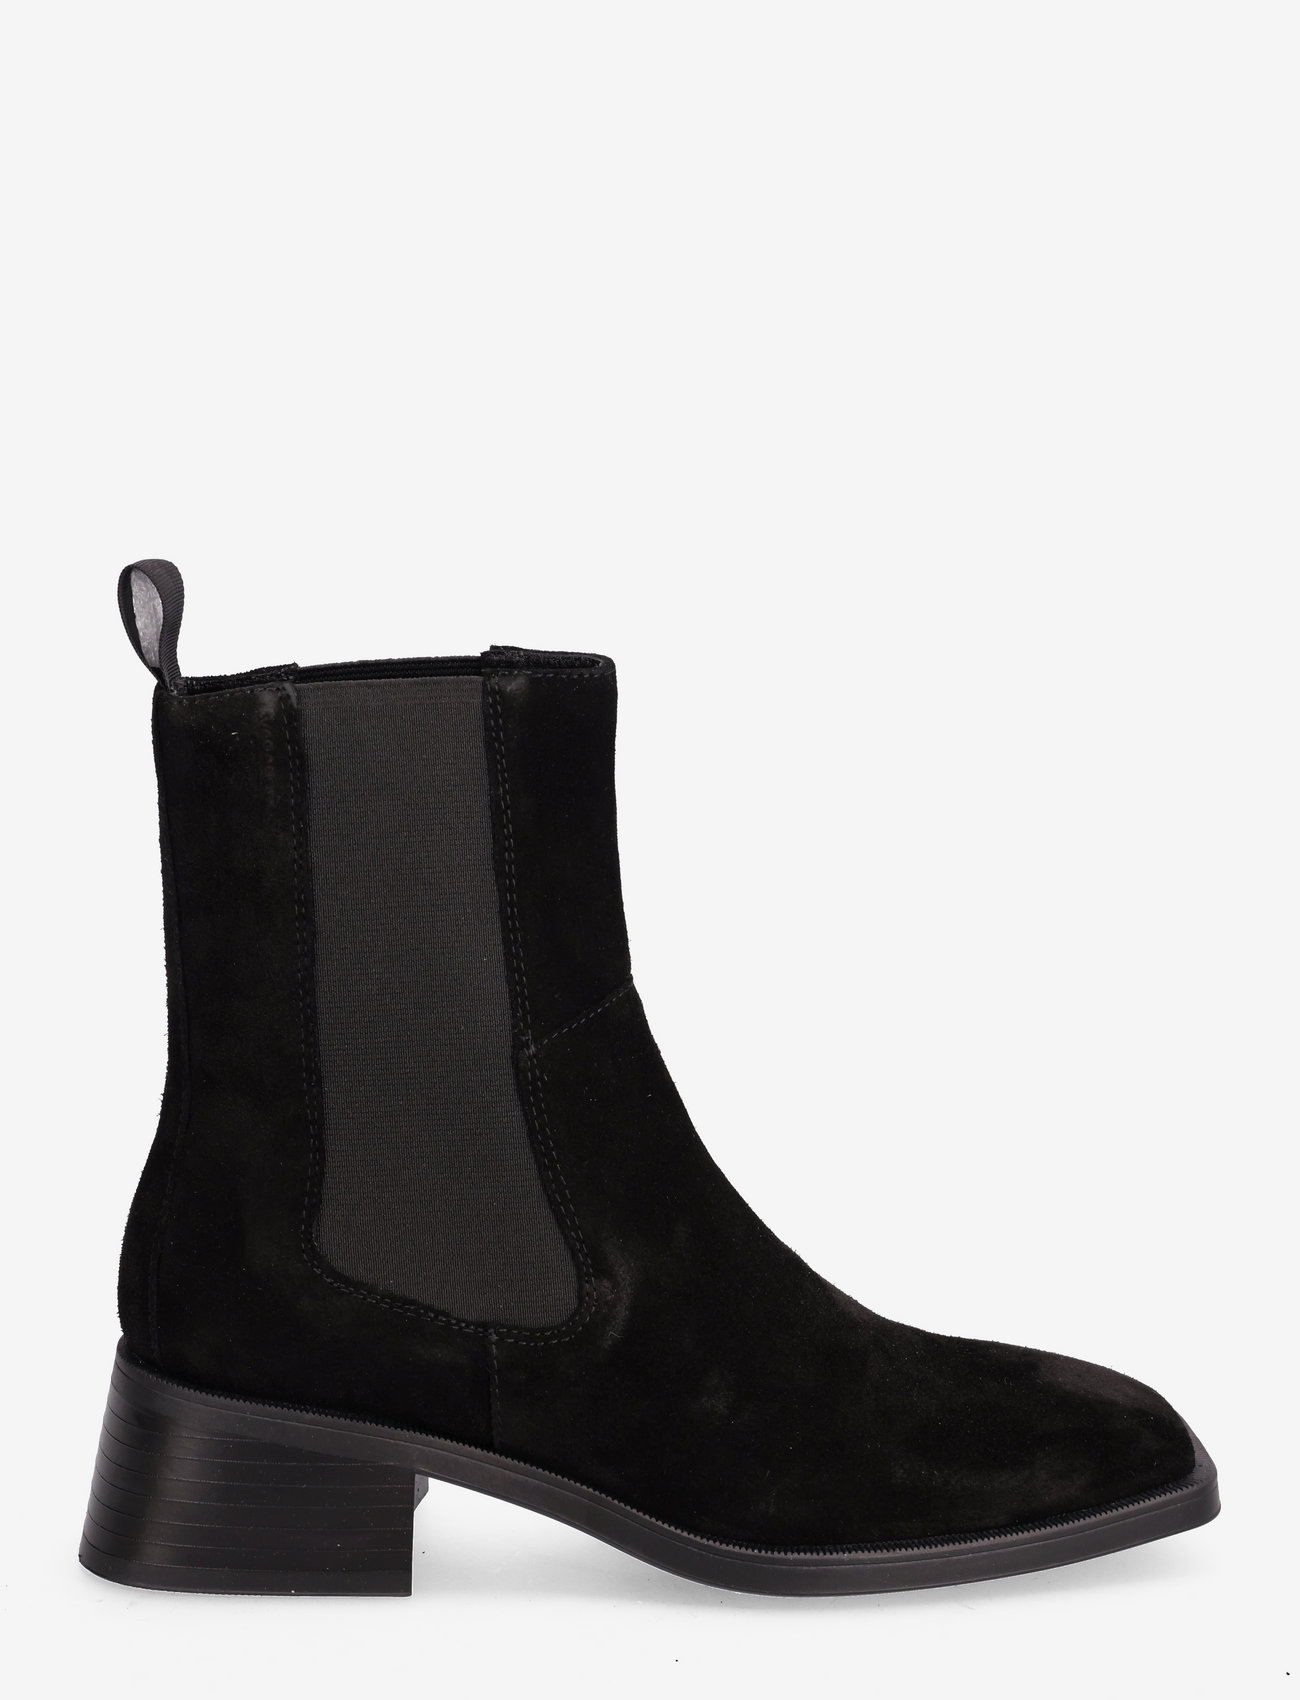 VAGABOND - BLANCA - chelsea boots - black - 1